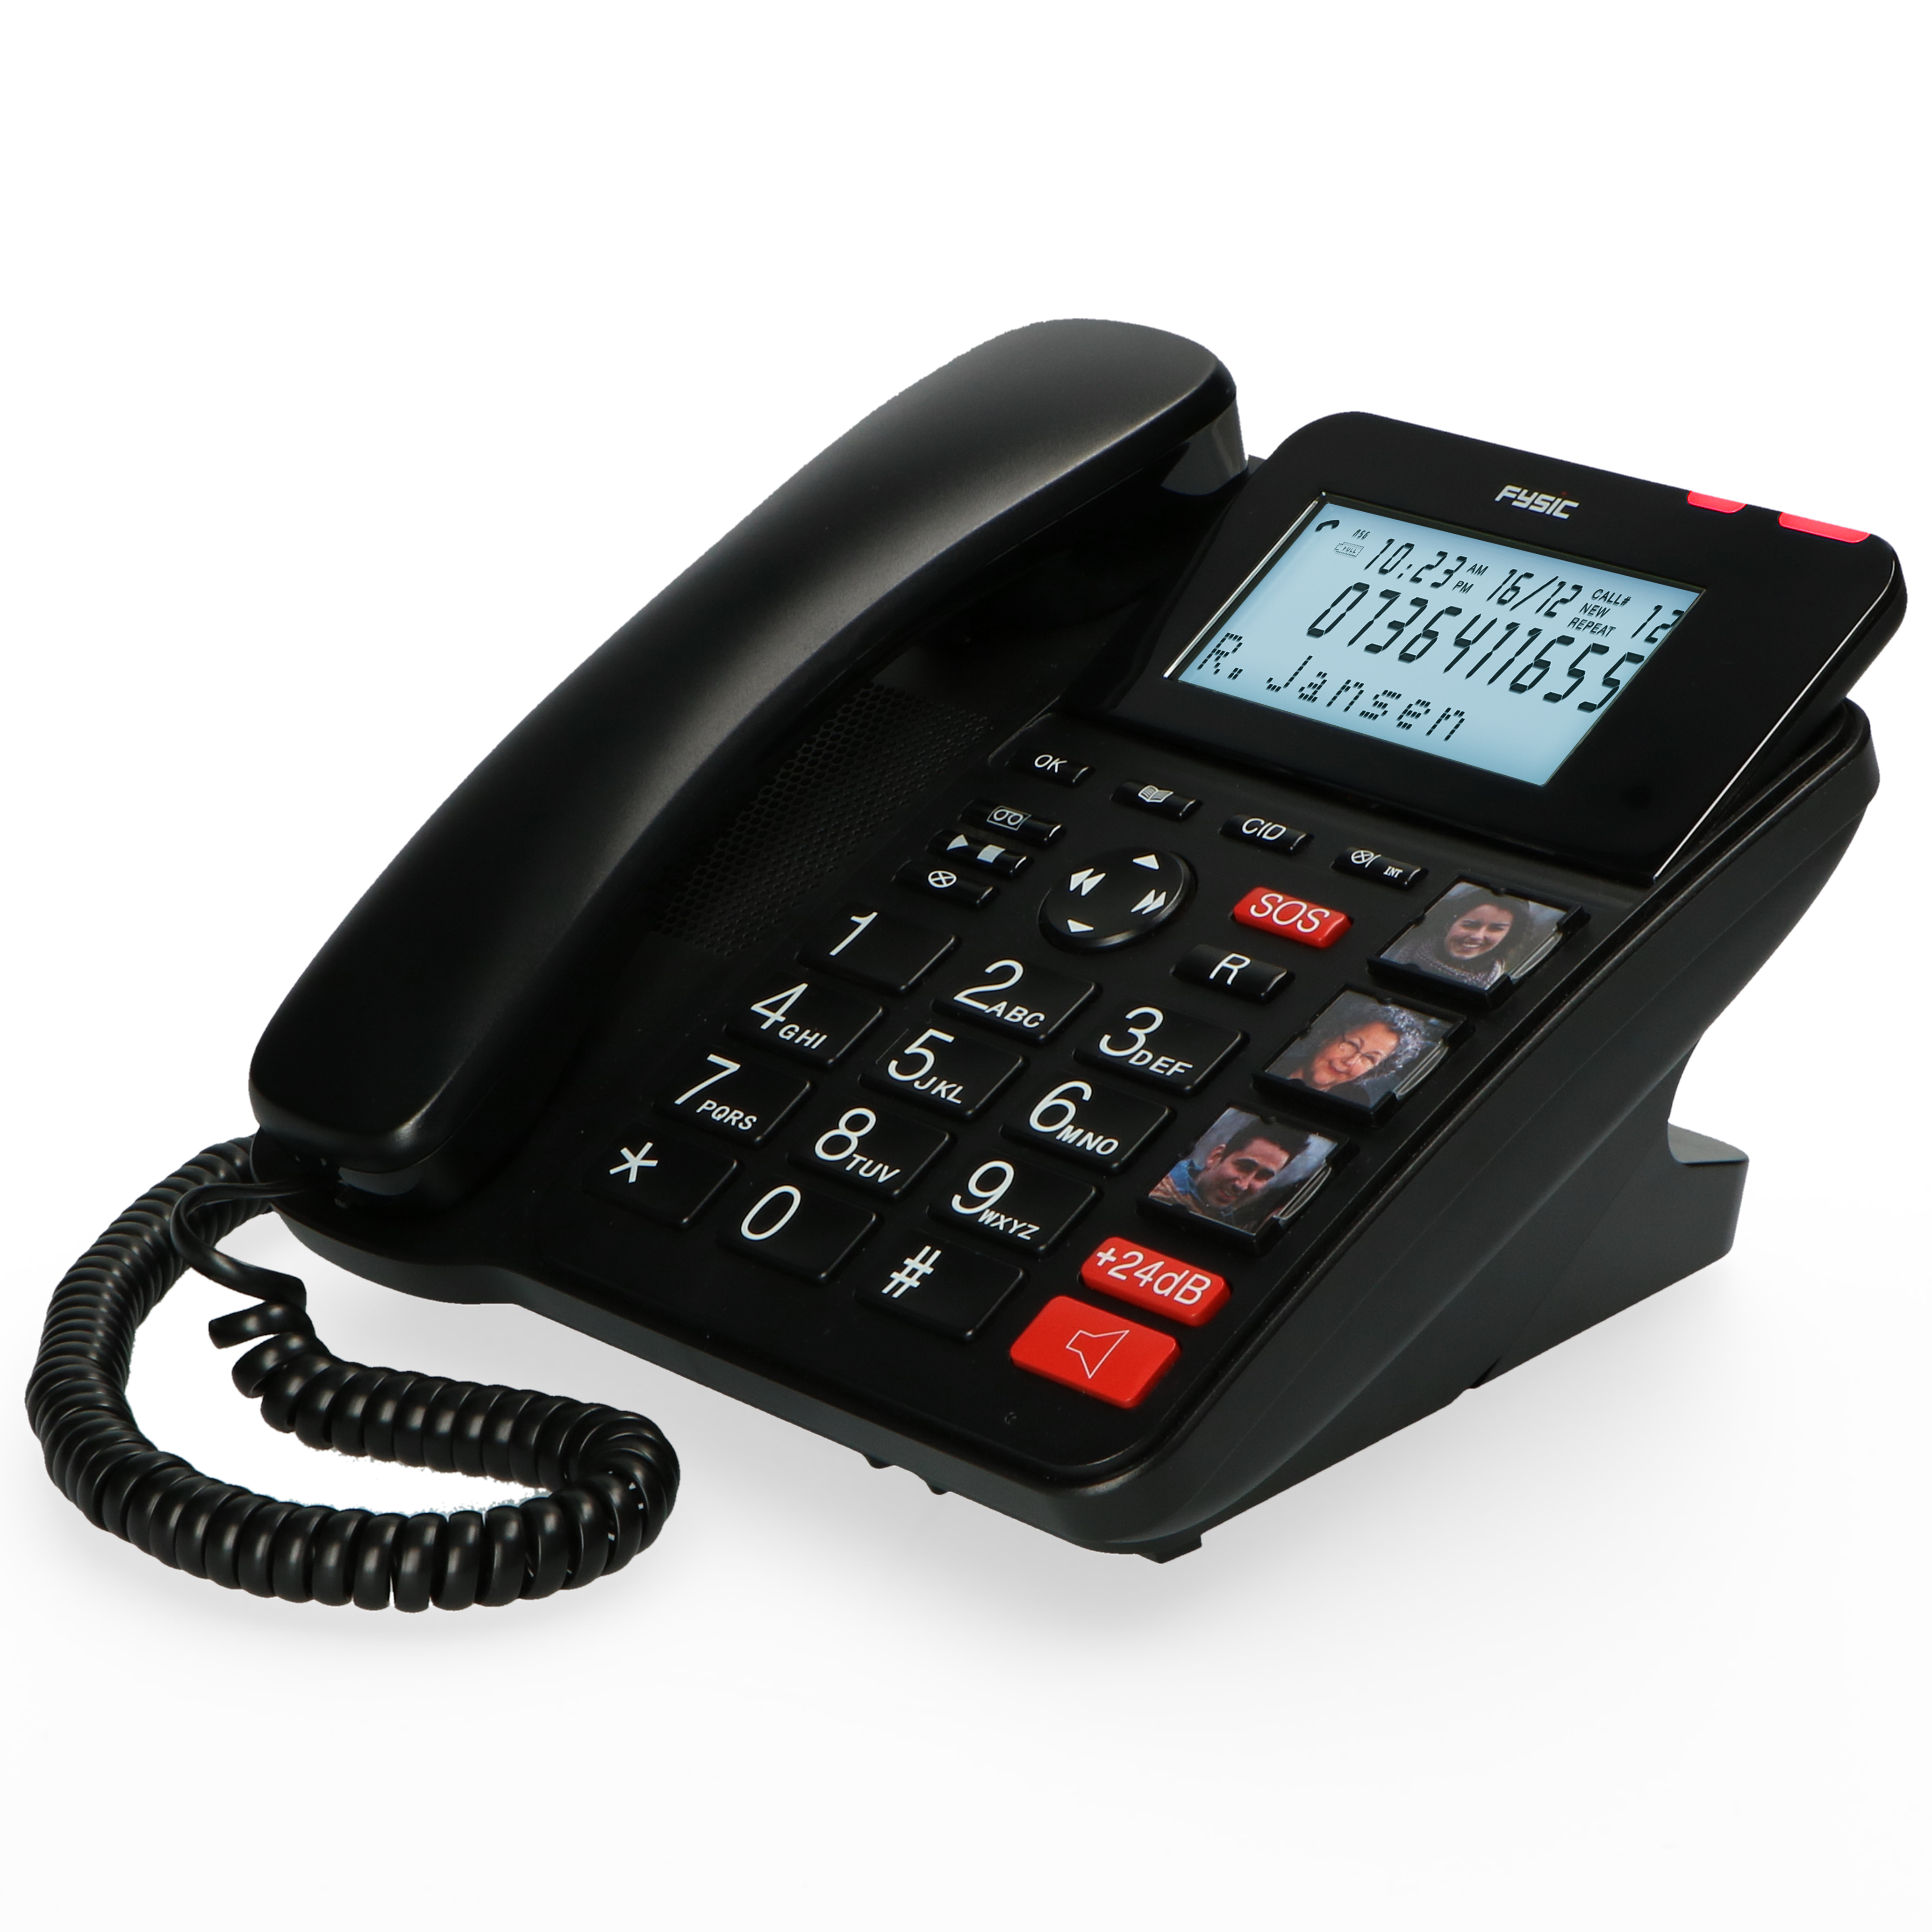 FYSIC FX-8025 - Seniorentelefon Handset Klingelverstärker Seniorentelefon mit und Klingelverstärker,großen Tasten,SOS-Taste extra mit